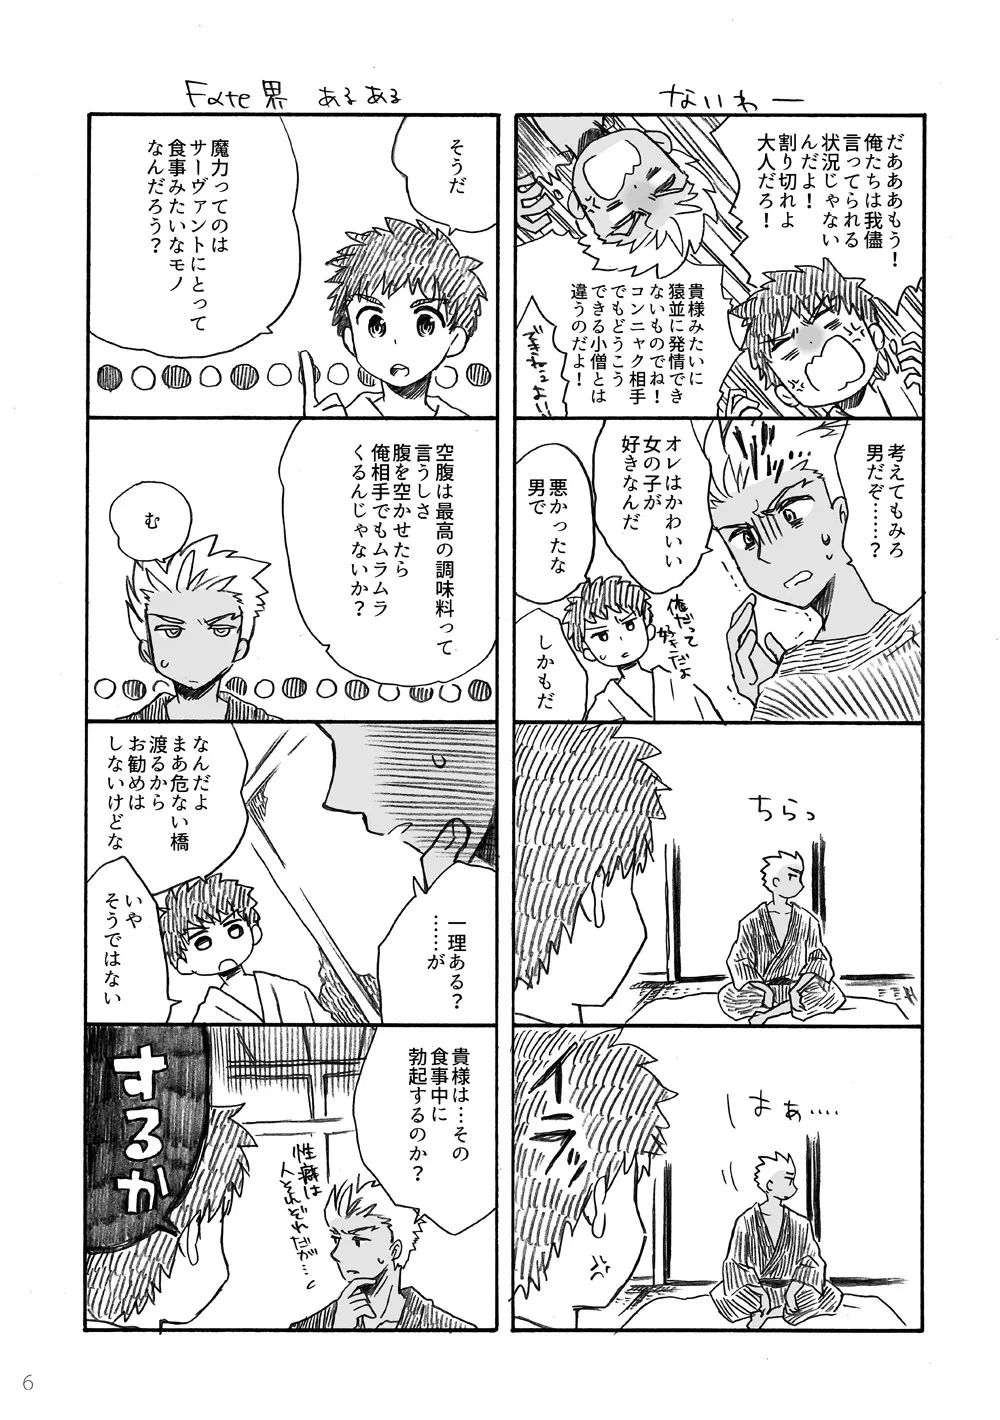 弓士本 - page68